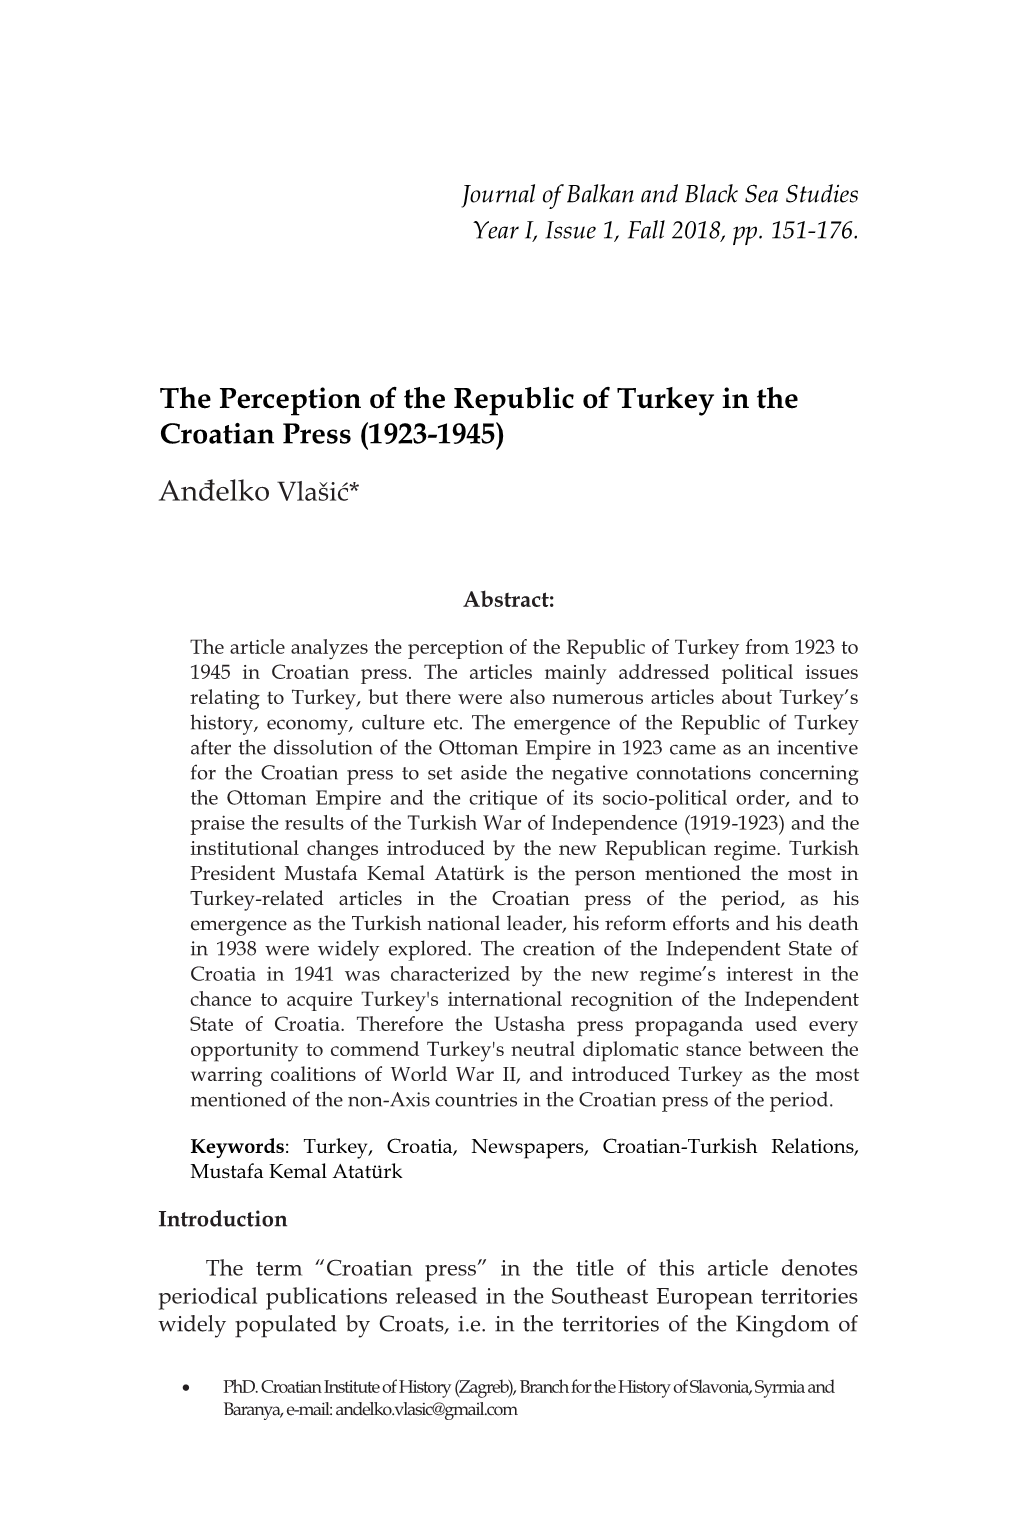 The Perception of the Republic of Turkey in the Croatian Press (1923-1945)